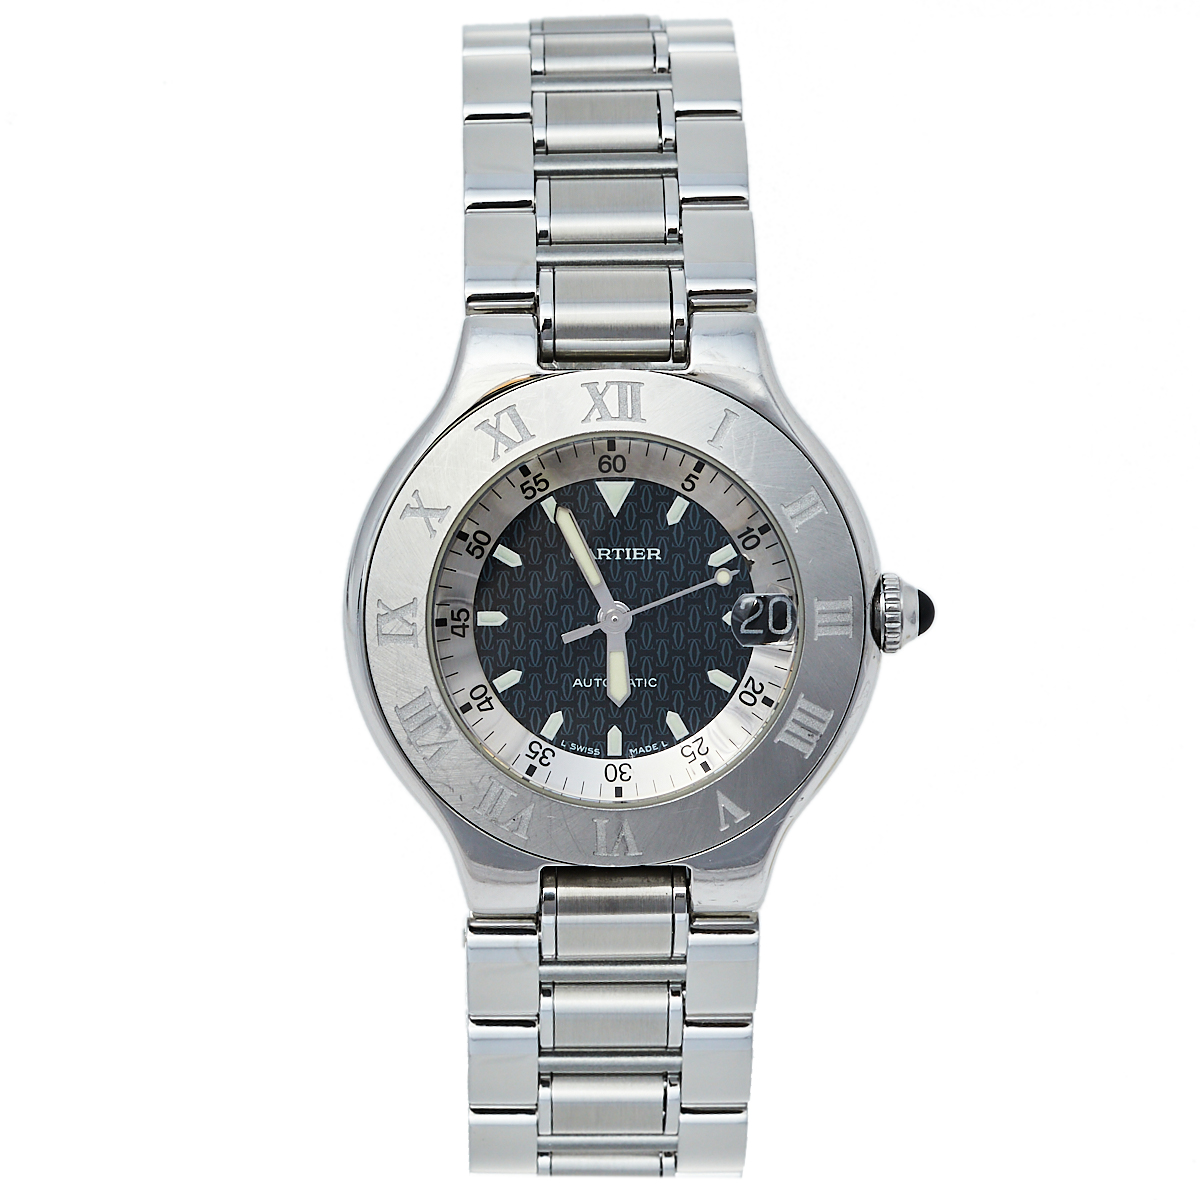 Cartier Black Stainless Steel Autoscaph 21 2427 Automatic Men's Wristwatch 36 mm